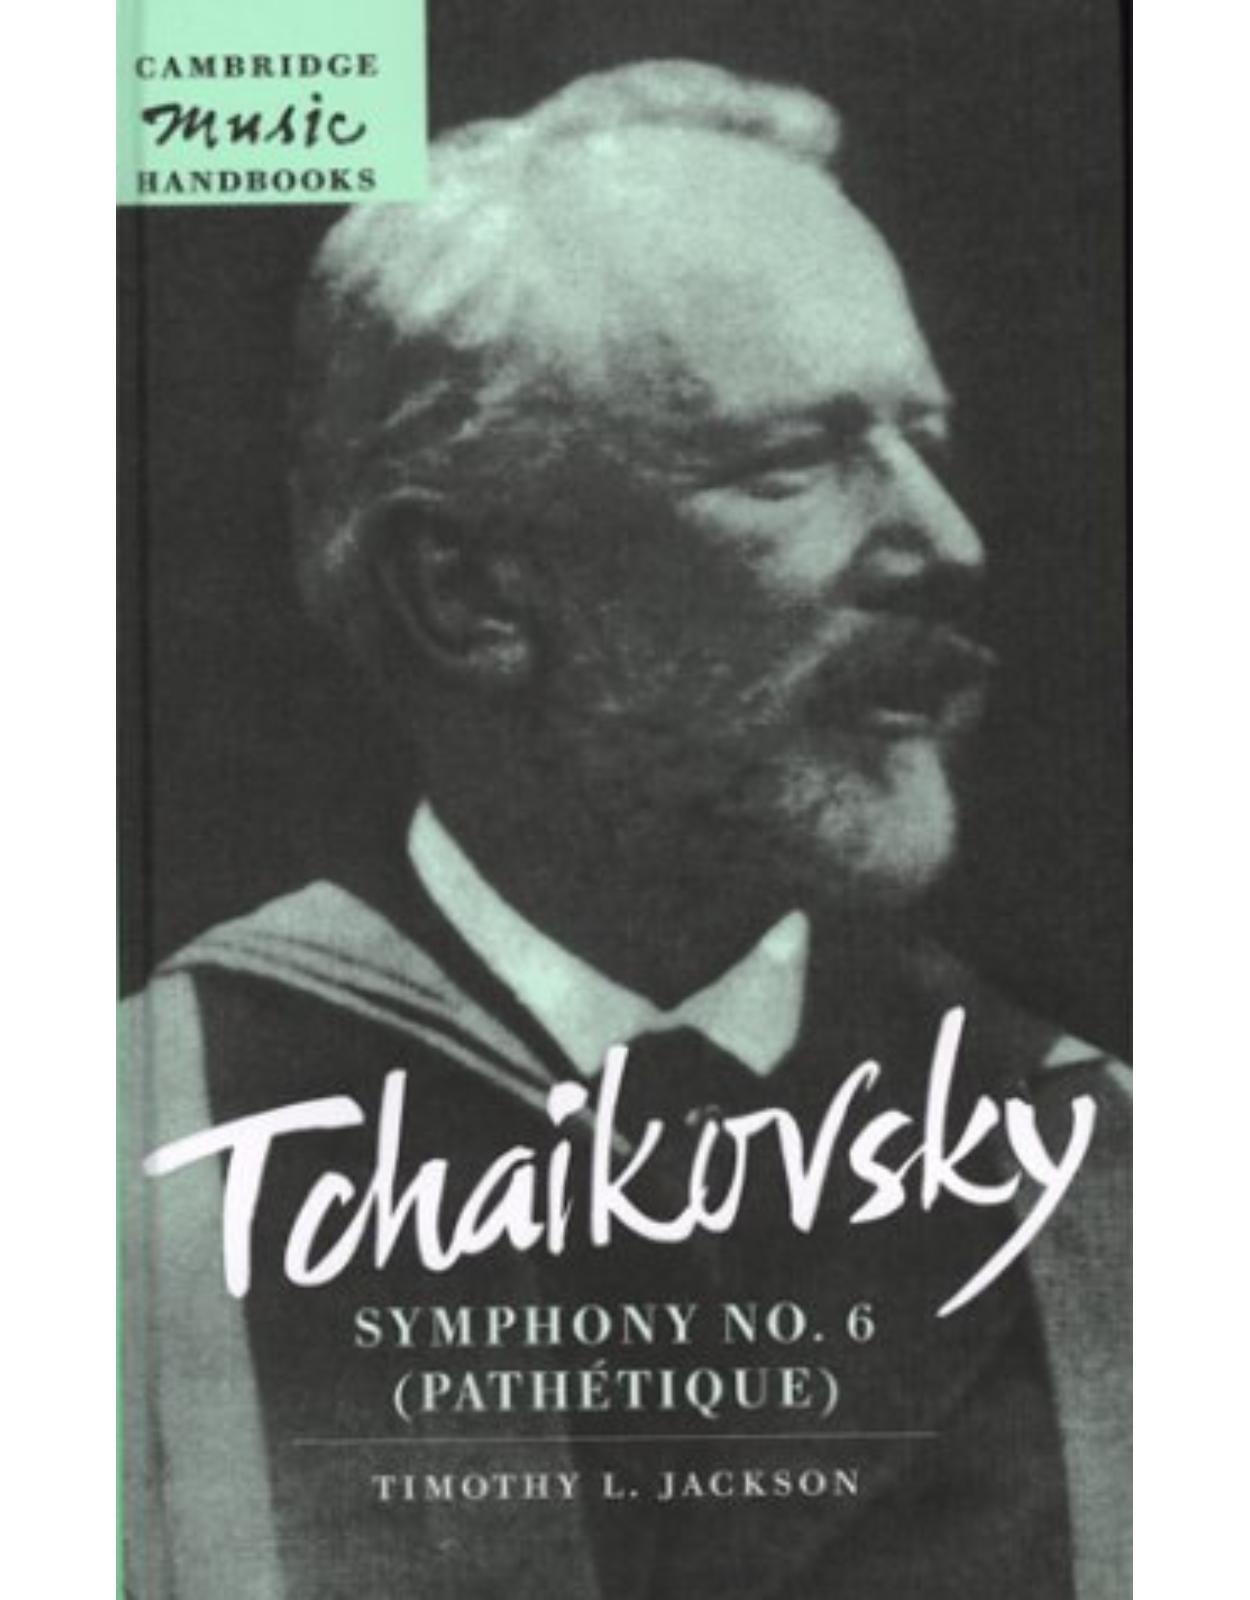 Tchaikovsky: Symphony No. 6 (Pathétique) (Cambridge Music Handbooks)